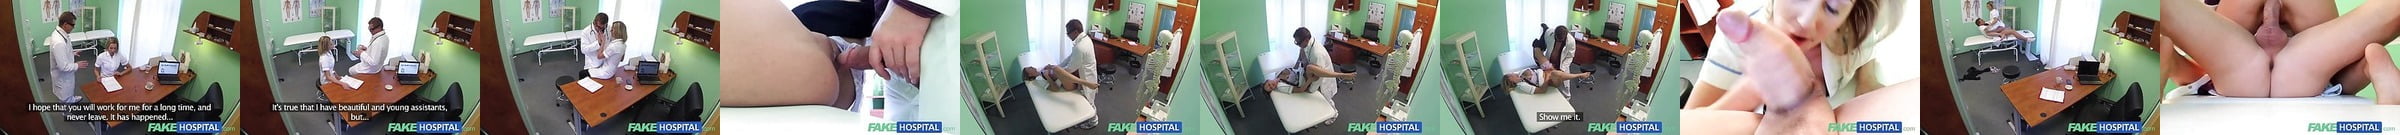 Vidéos Porno Fake Hospital Durée Les Meilleures Xhamster